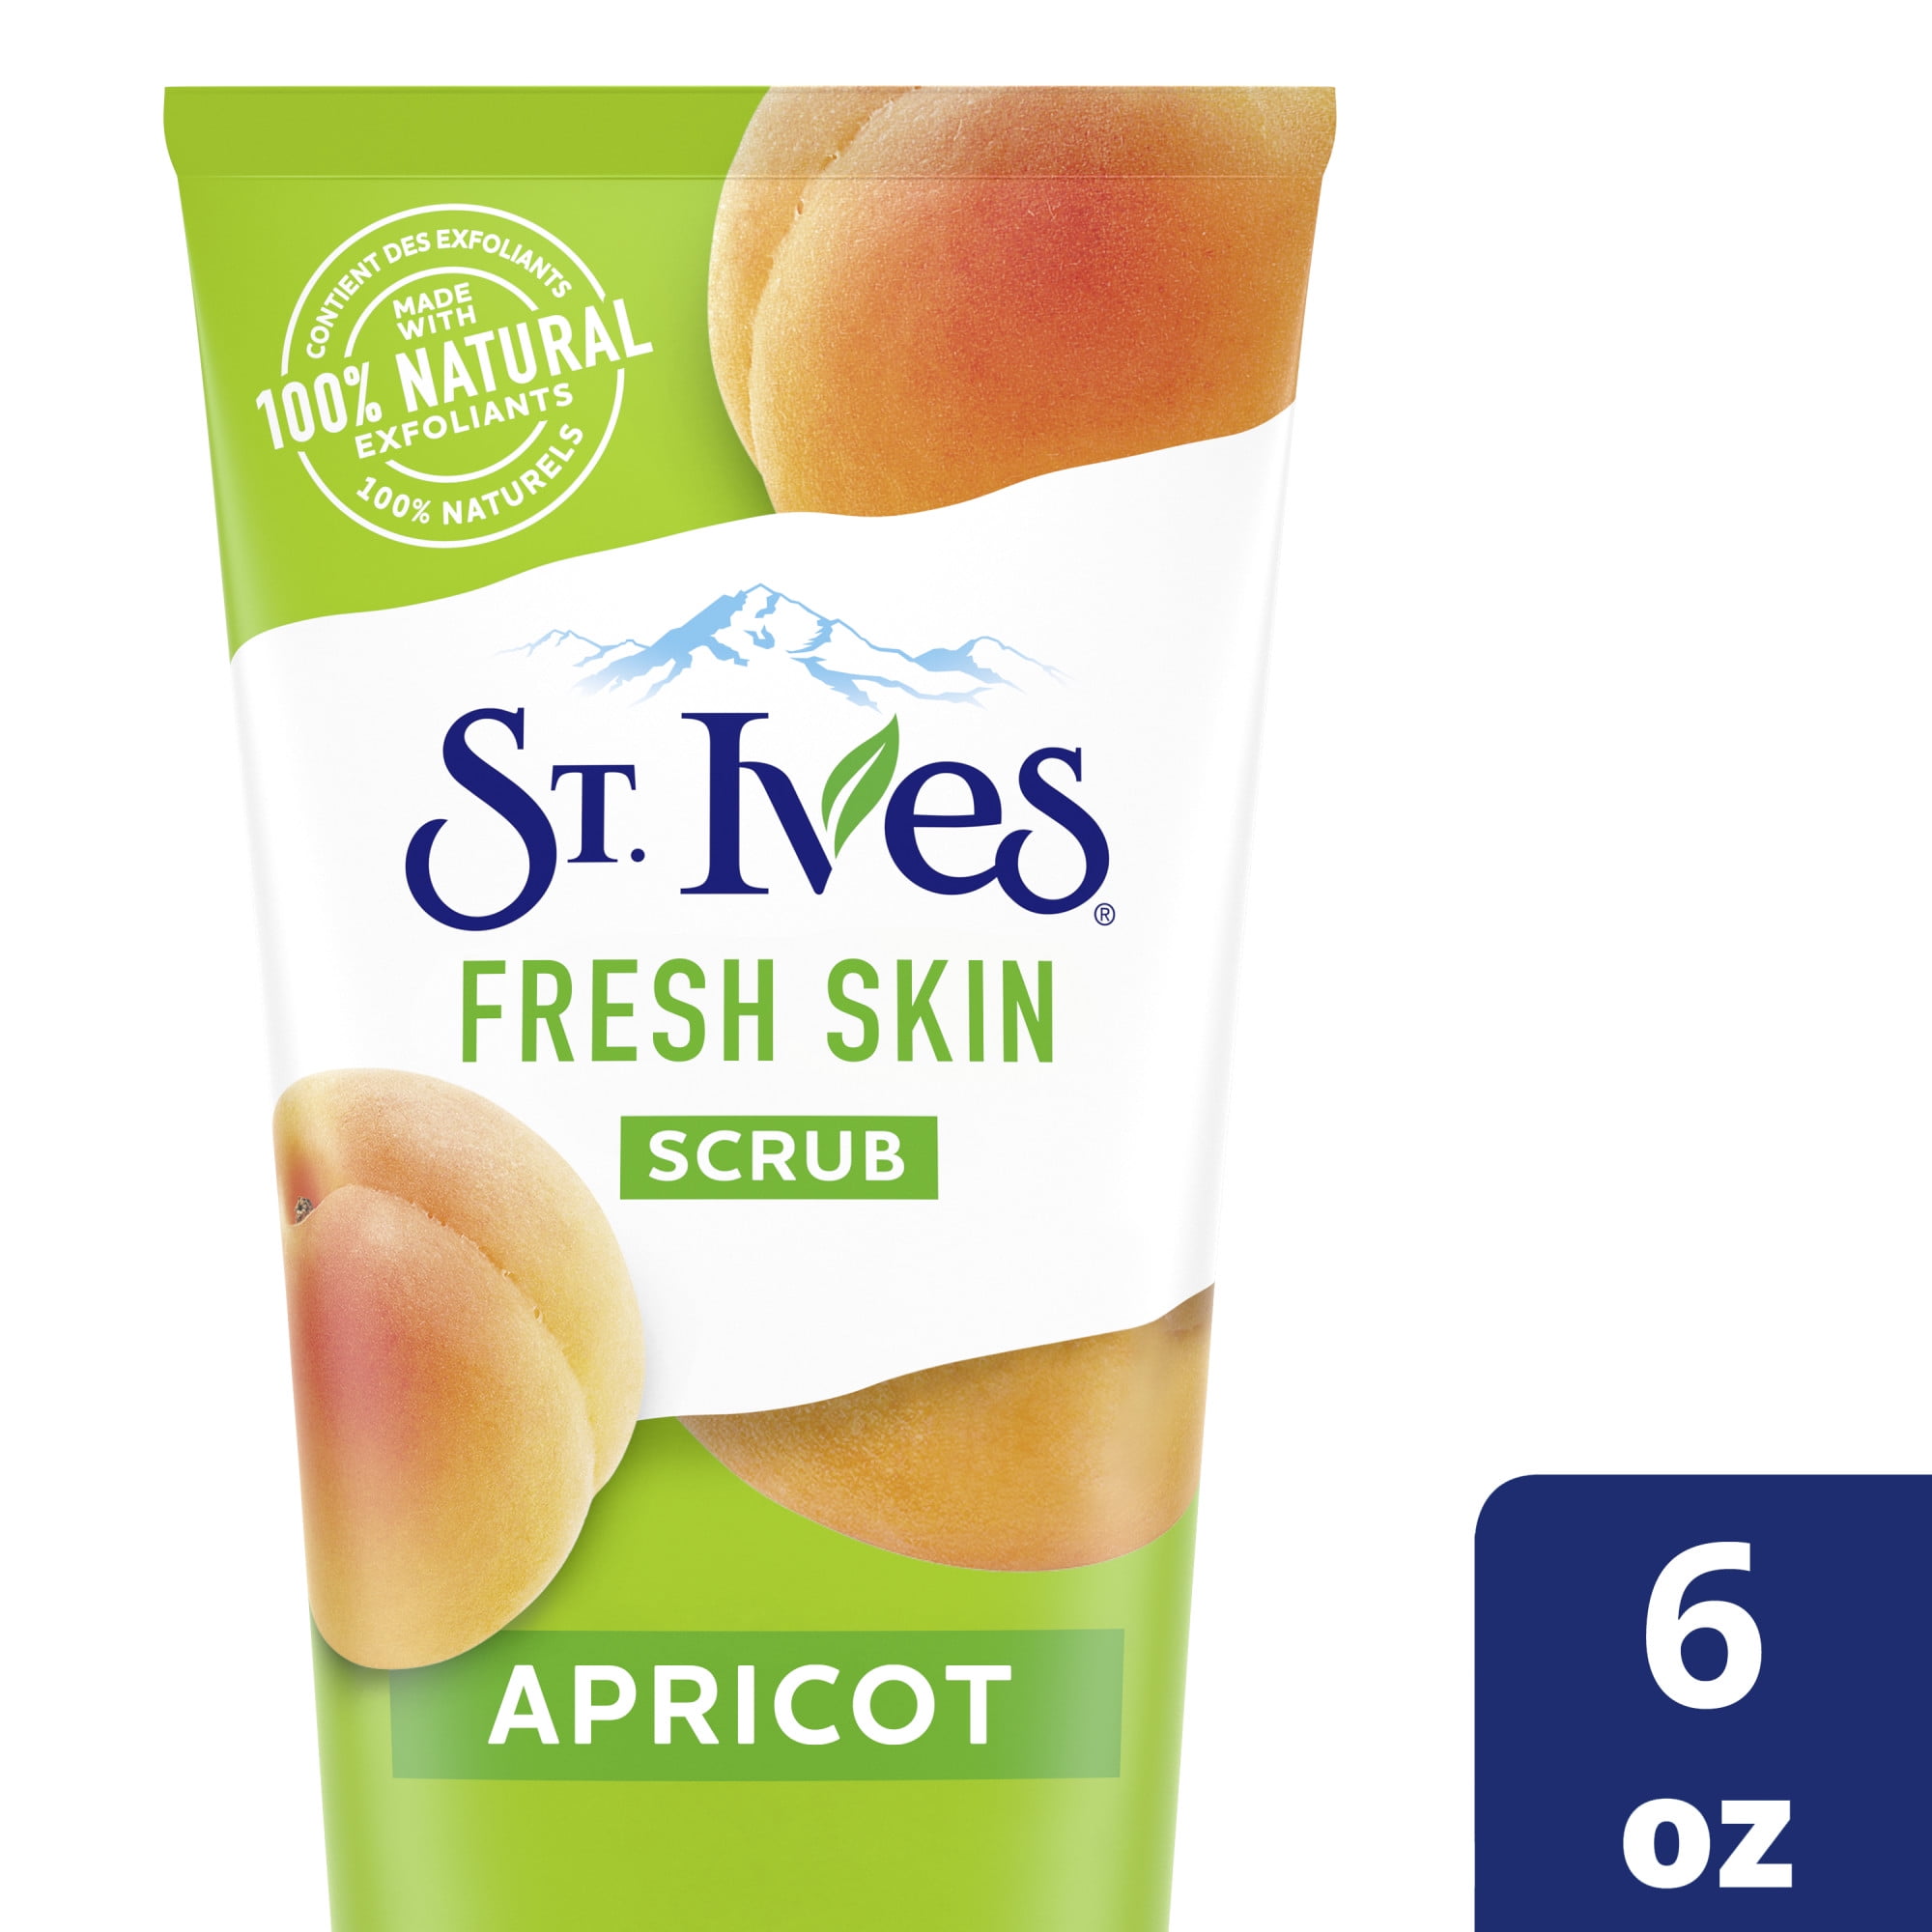 St. Ives Fresh Skin Apricot Face Scrub 6 oz